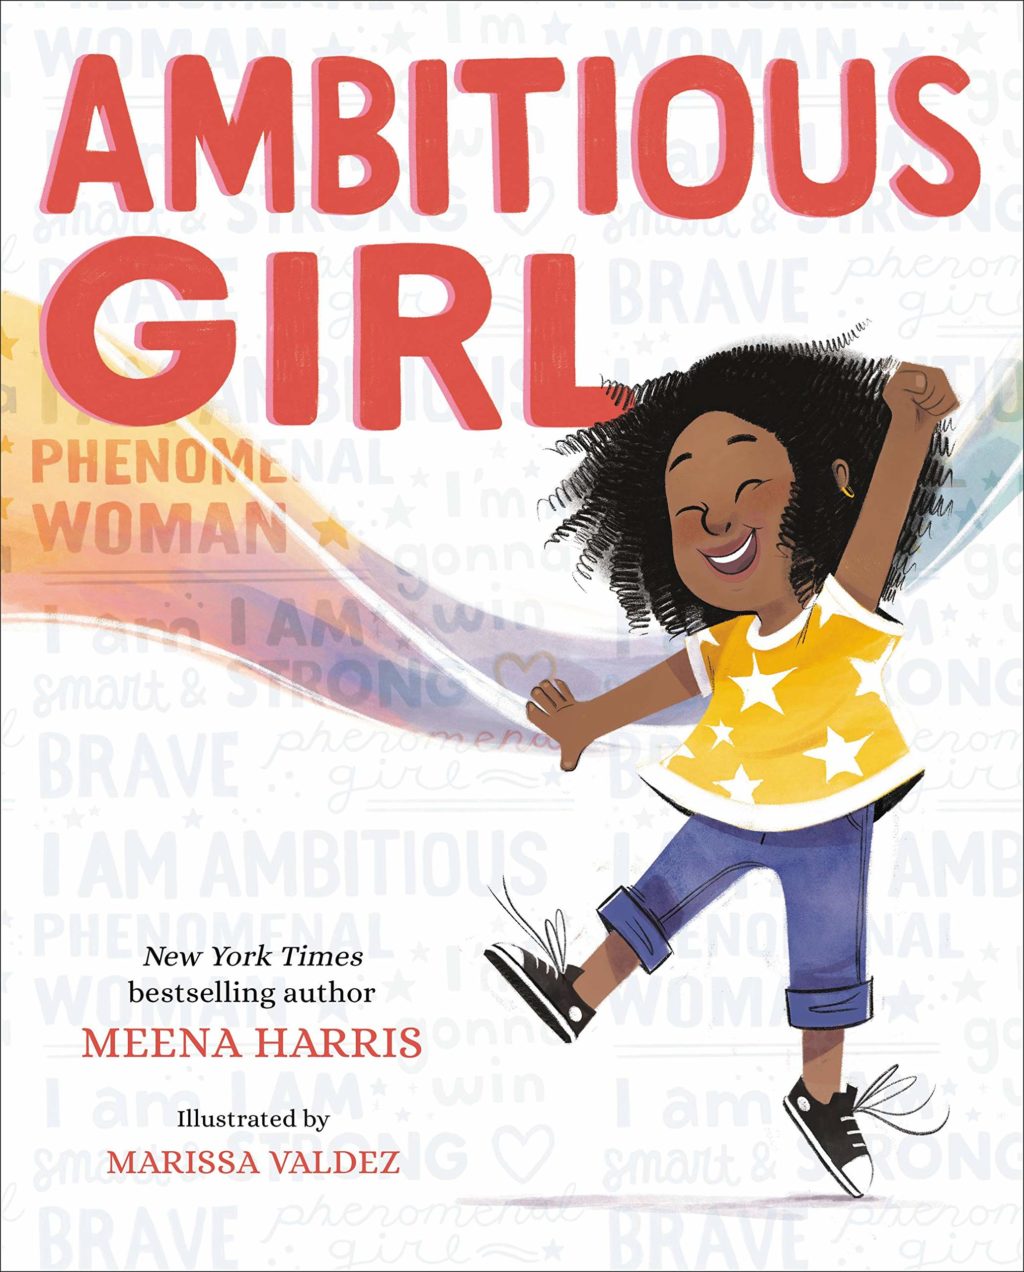 Ambitious Girl Written by Meena Harris, illustrated by Marissa Valdez